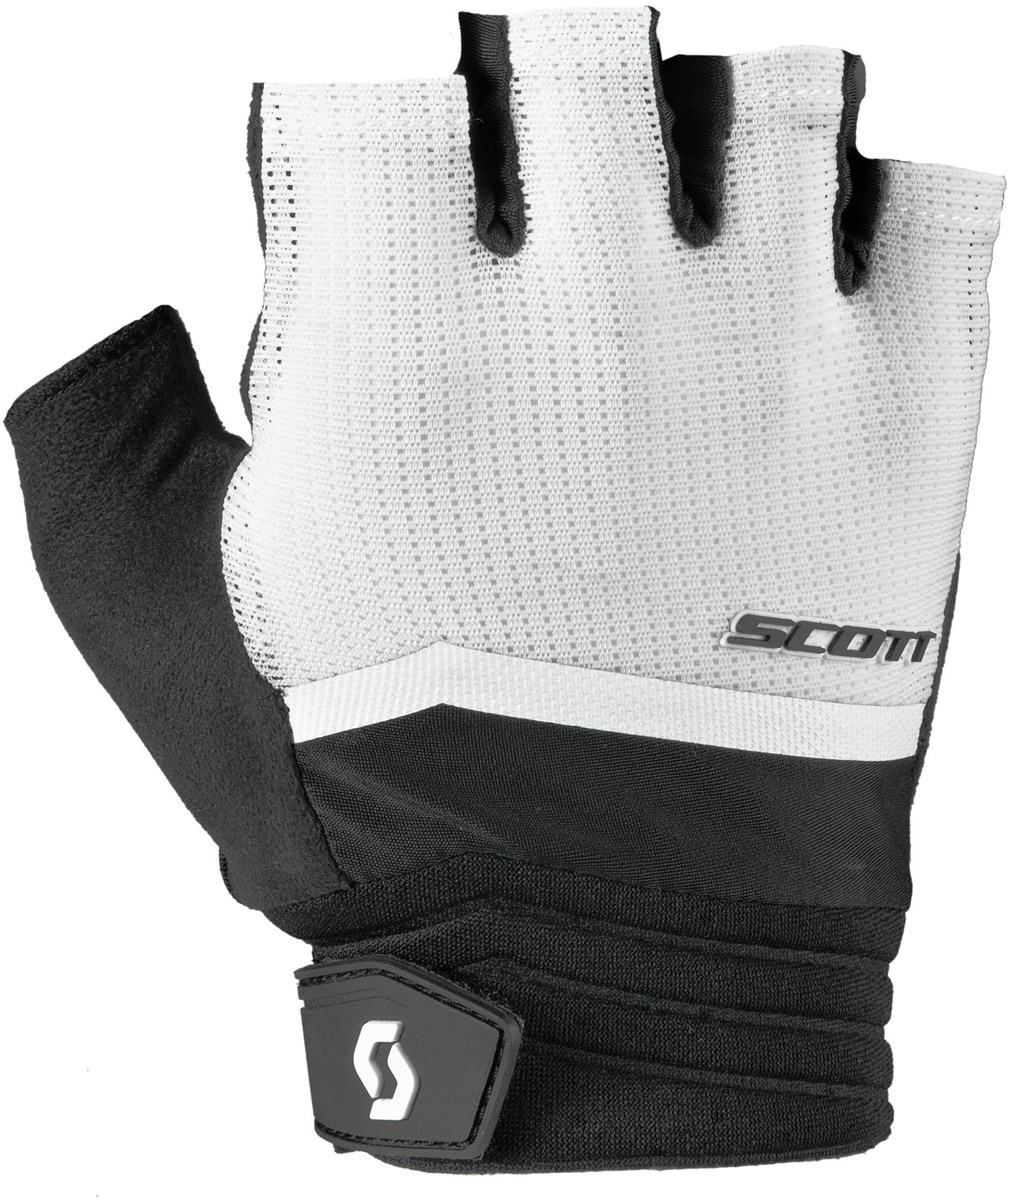 Scott Prerform Short Finger Cycling Gloves product image